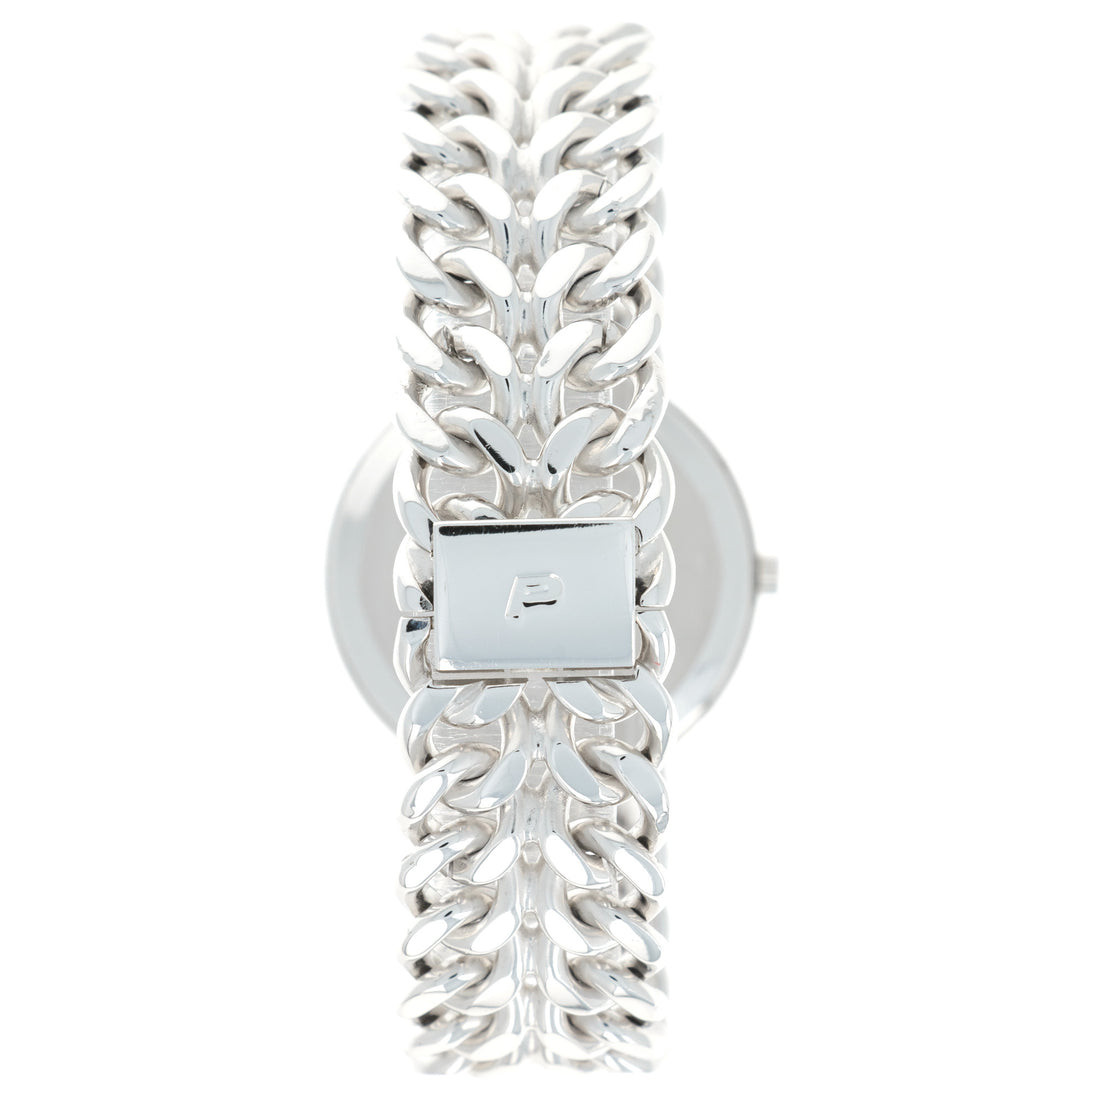 Piaget White Gold Lapis Link Bracelet Watch